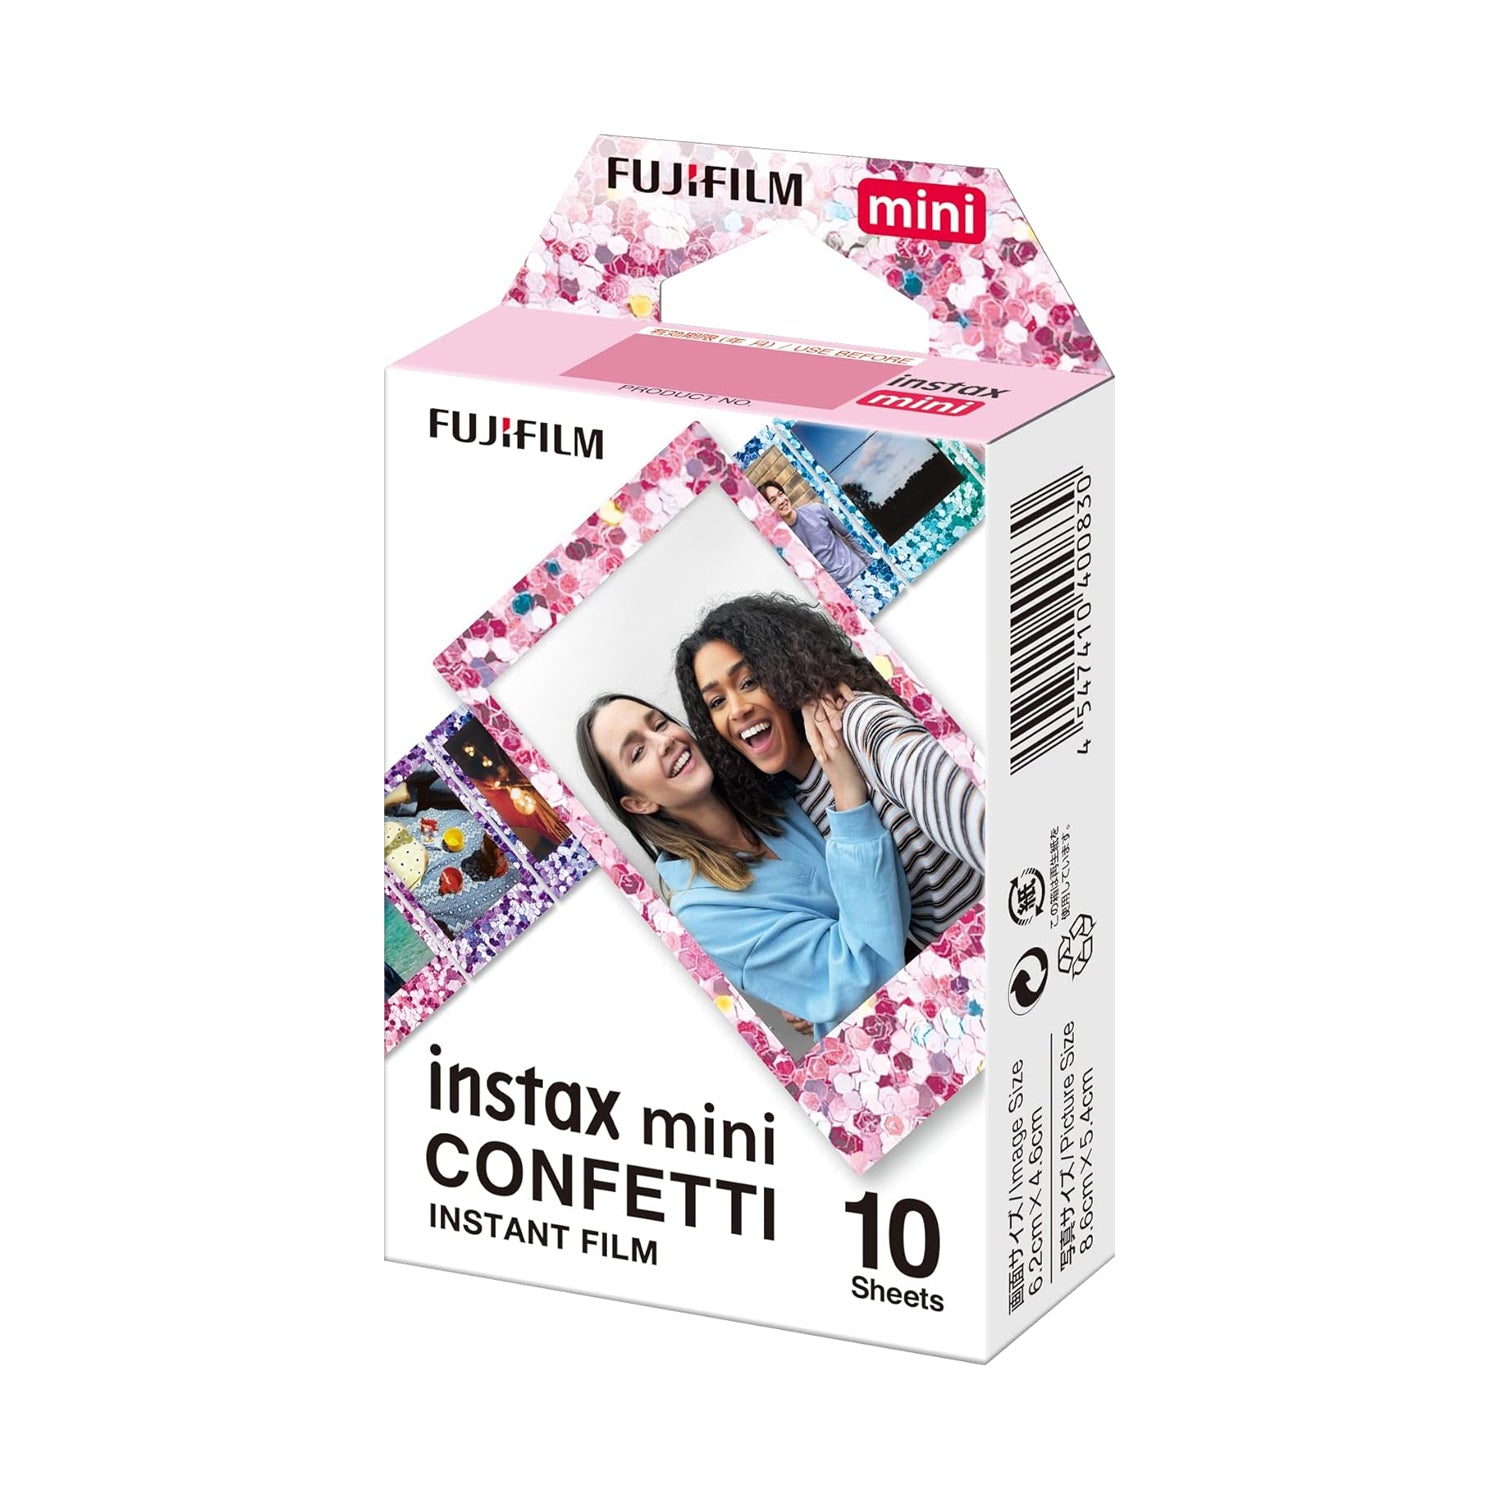 Fujifilm Instax Mini Confetti Film Pack